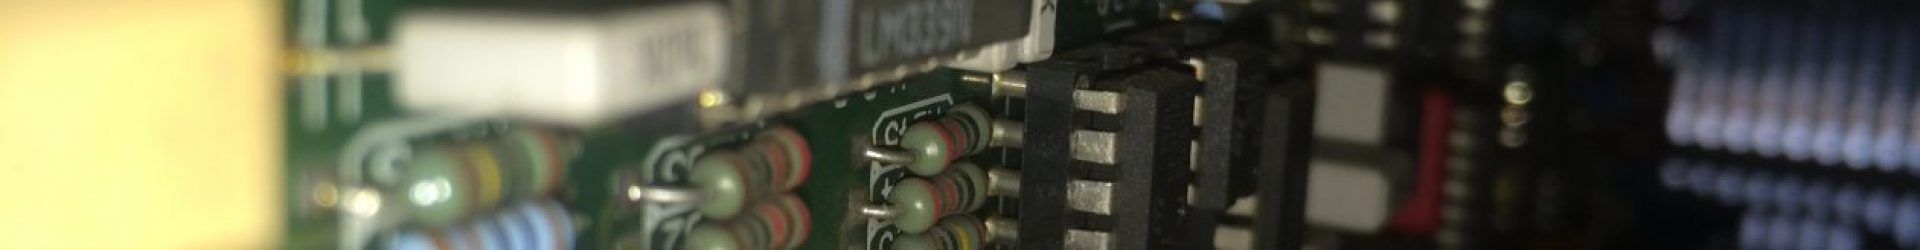 ShoutingElectronics #11 – Remote Alarm Sensor Flipping Logic